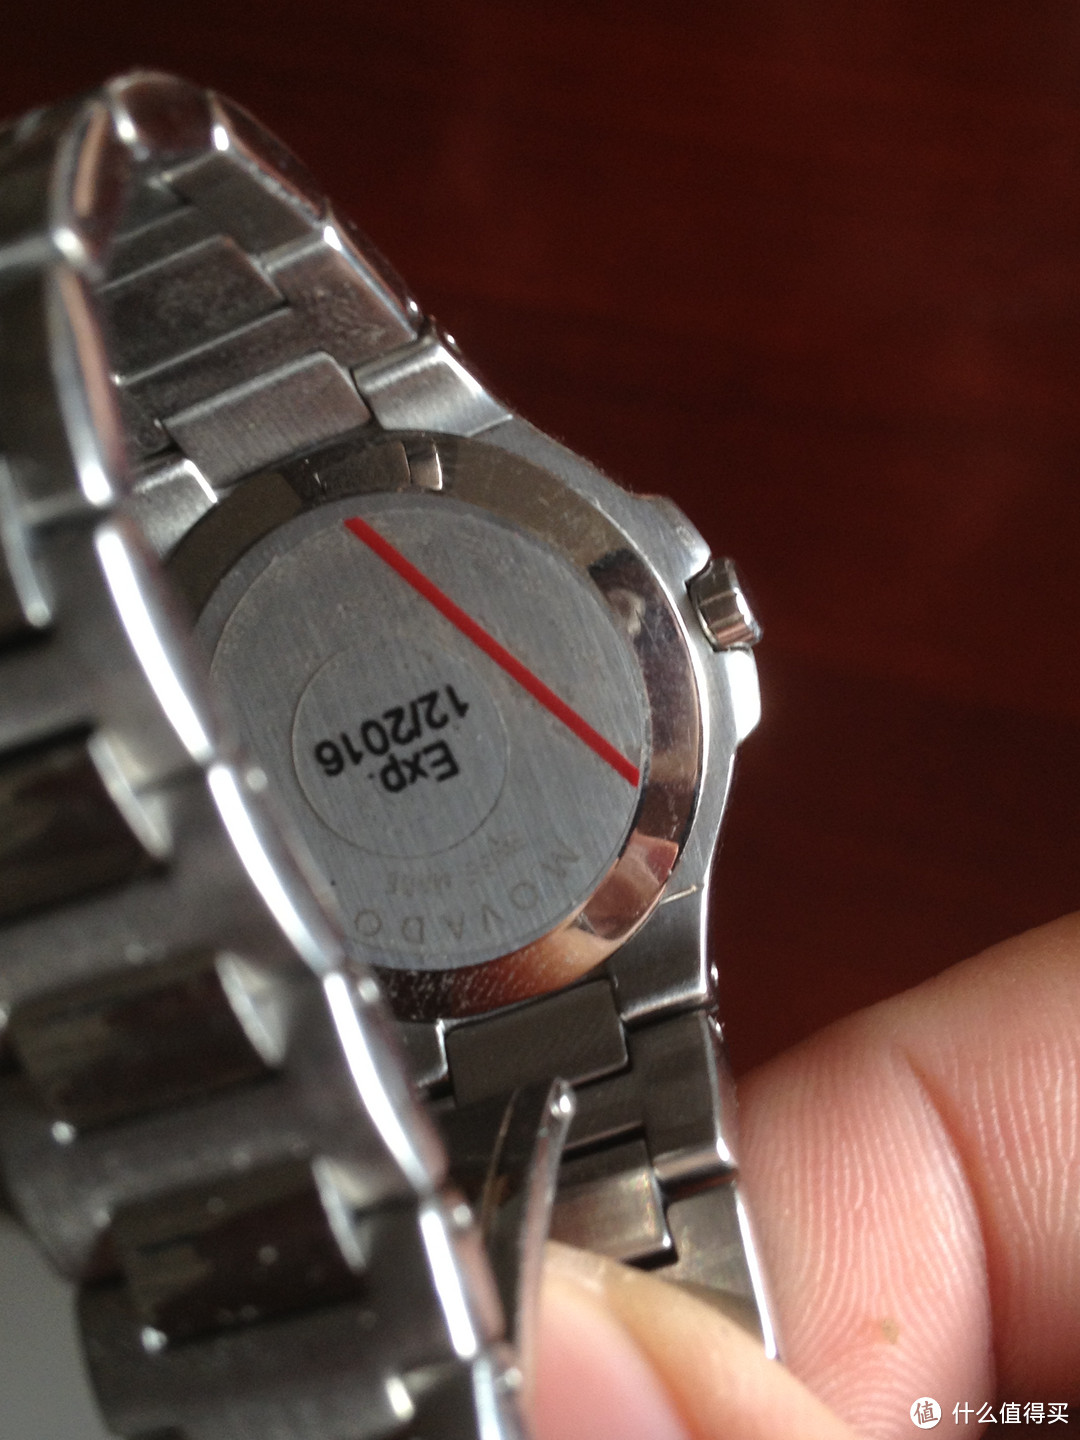 ashford 购买的 Movado 摩凡陀 手表 返修经历